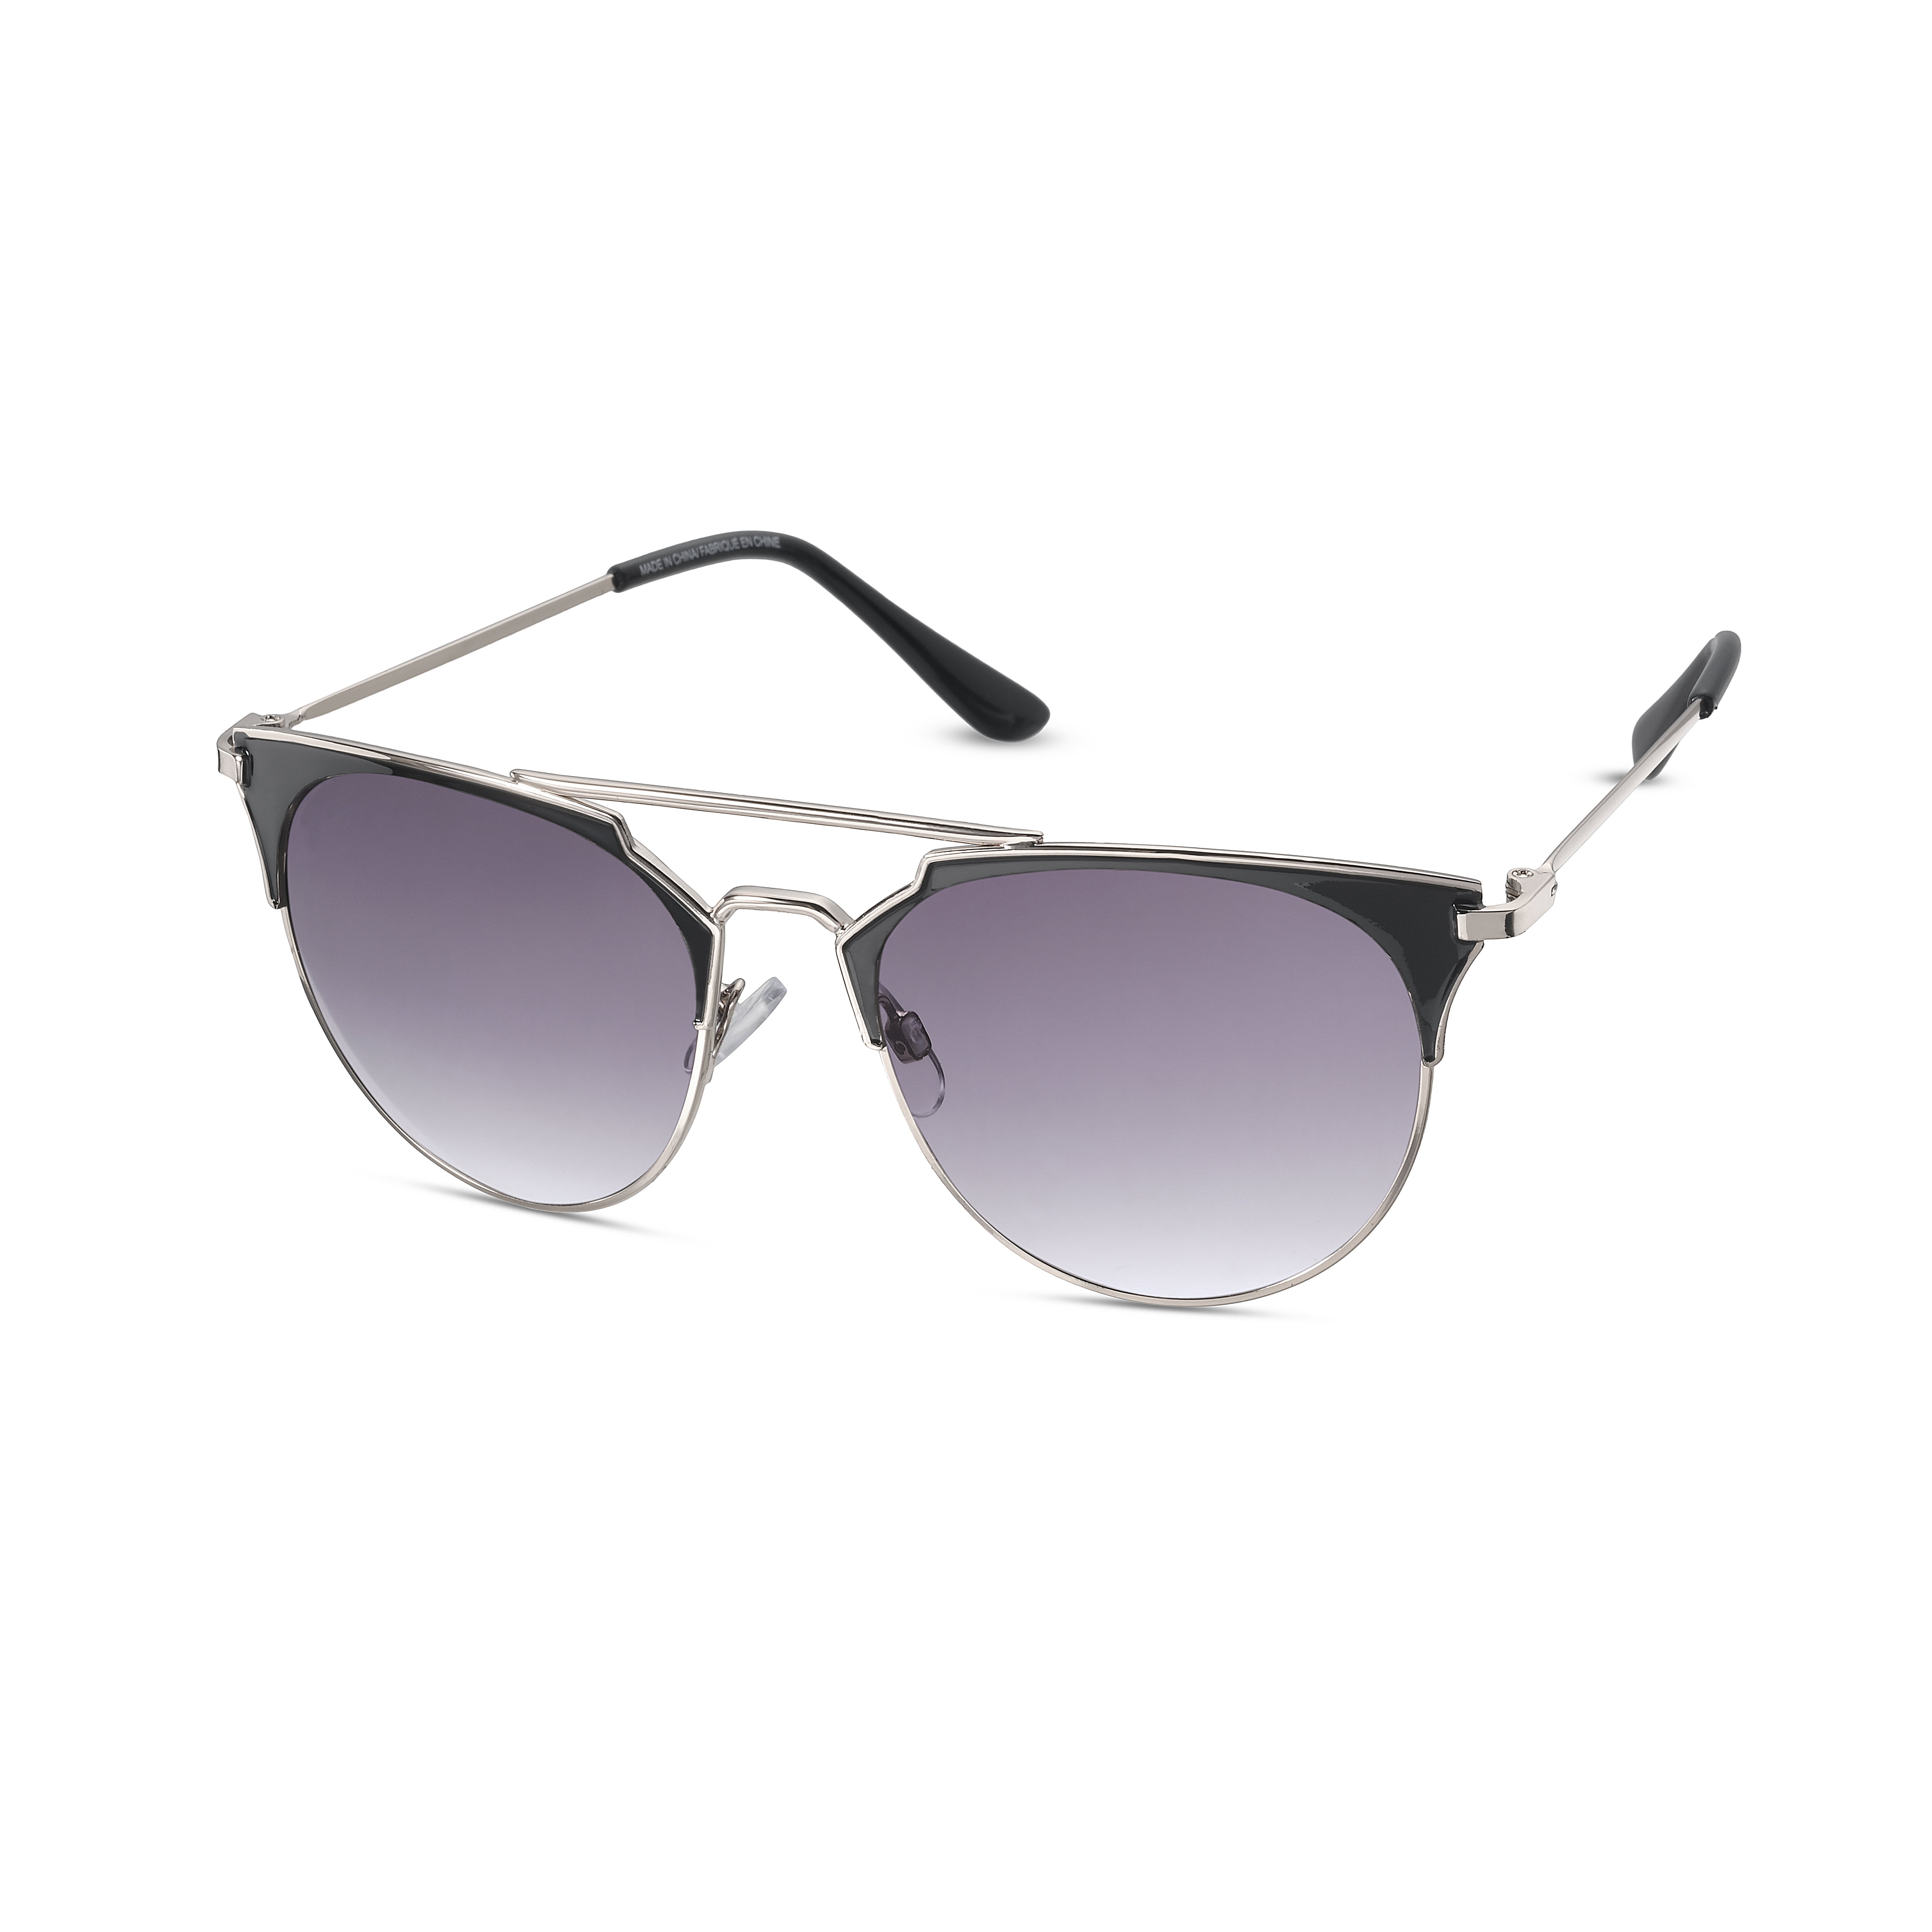 Leaead Sunglasses 100% UV Protection Metal Frame Square Gradient Lens Lightweight Stylish Design for Men/Women 